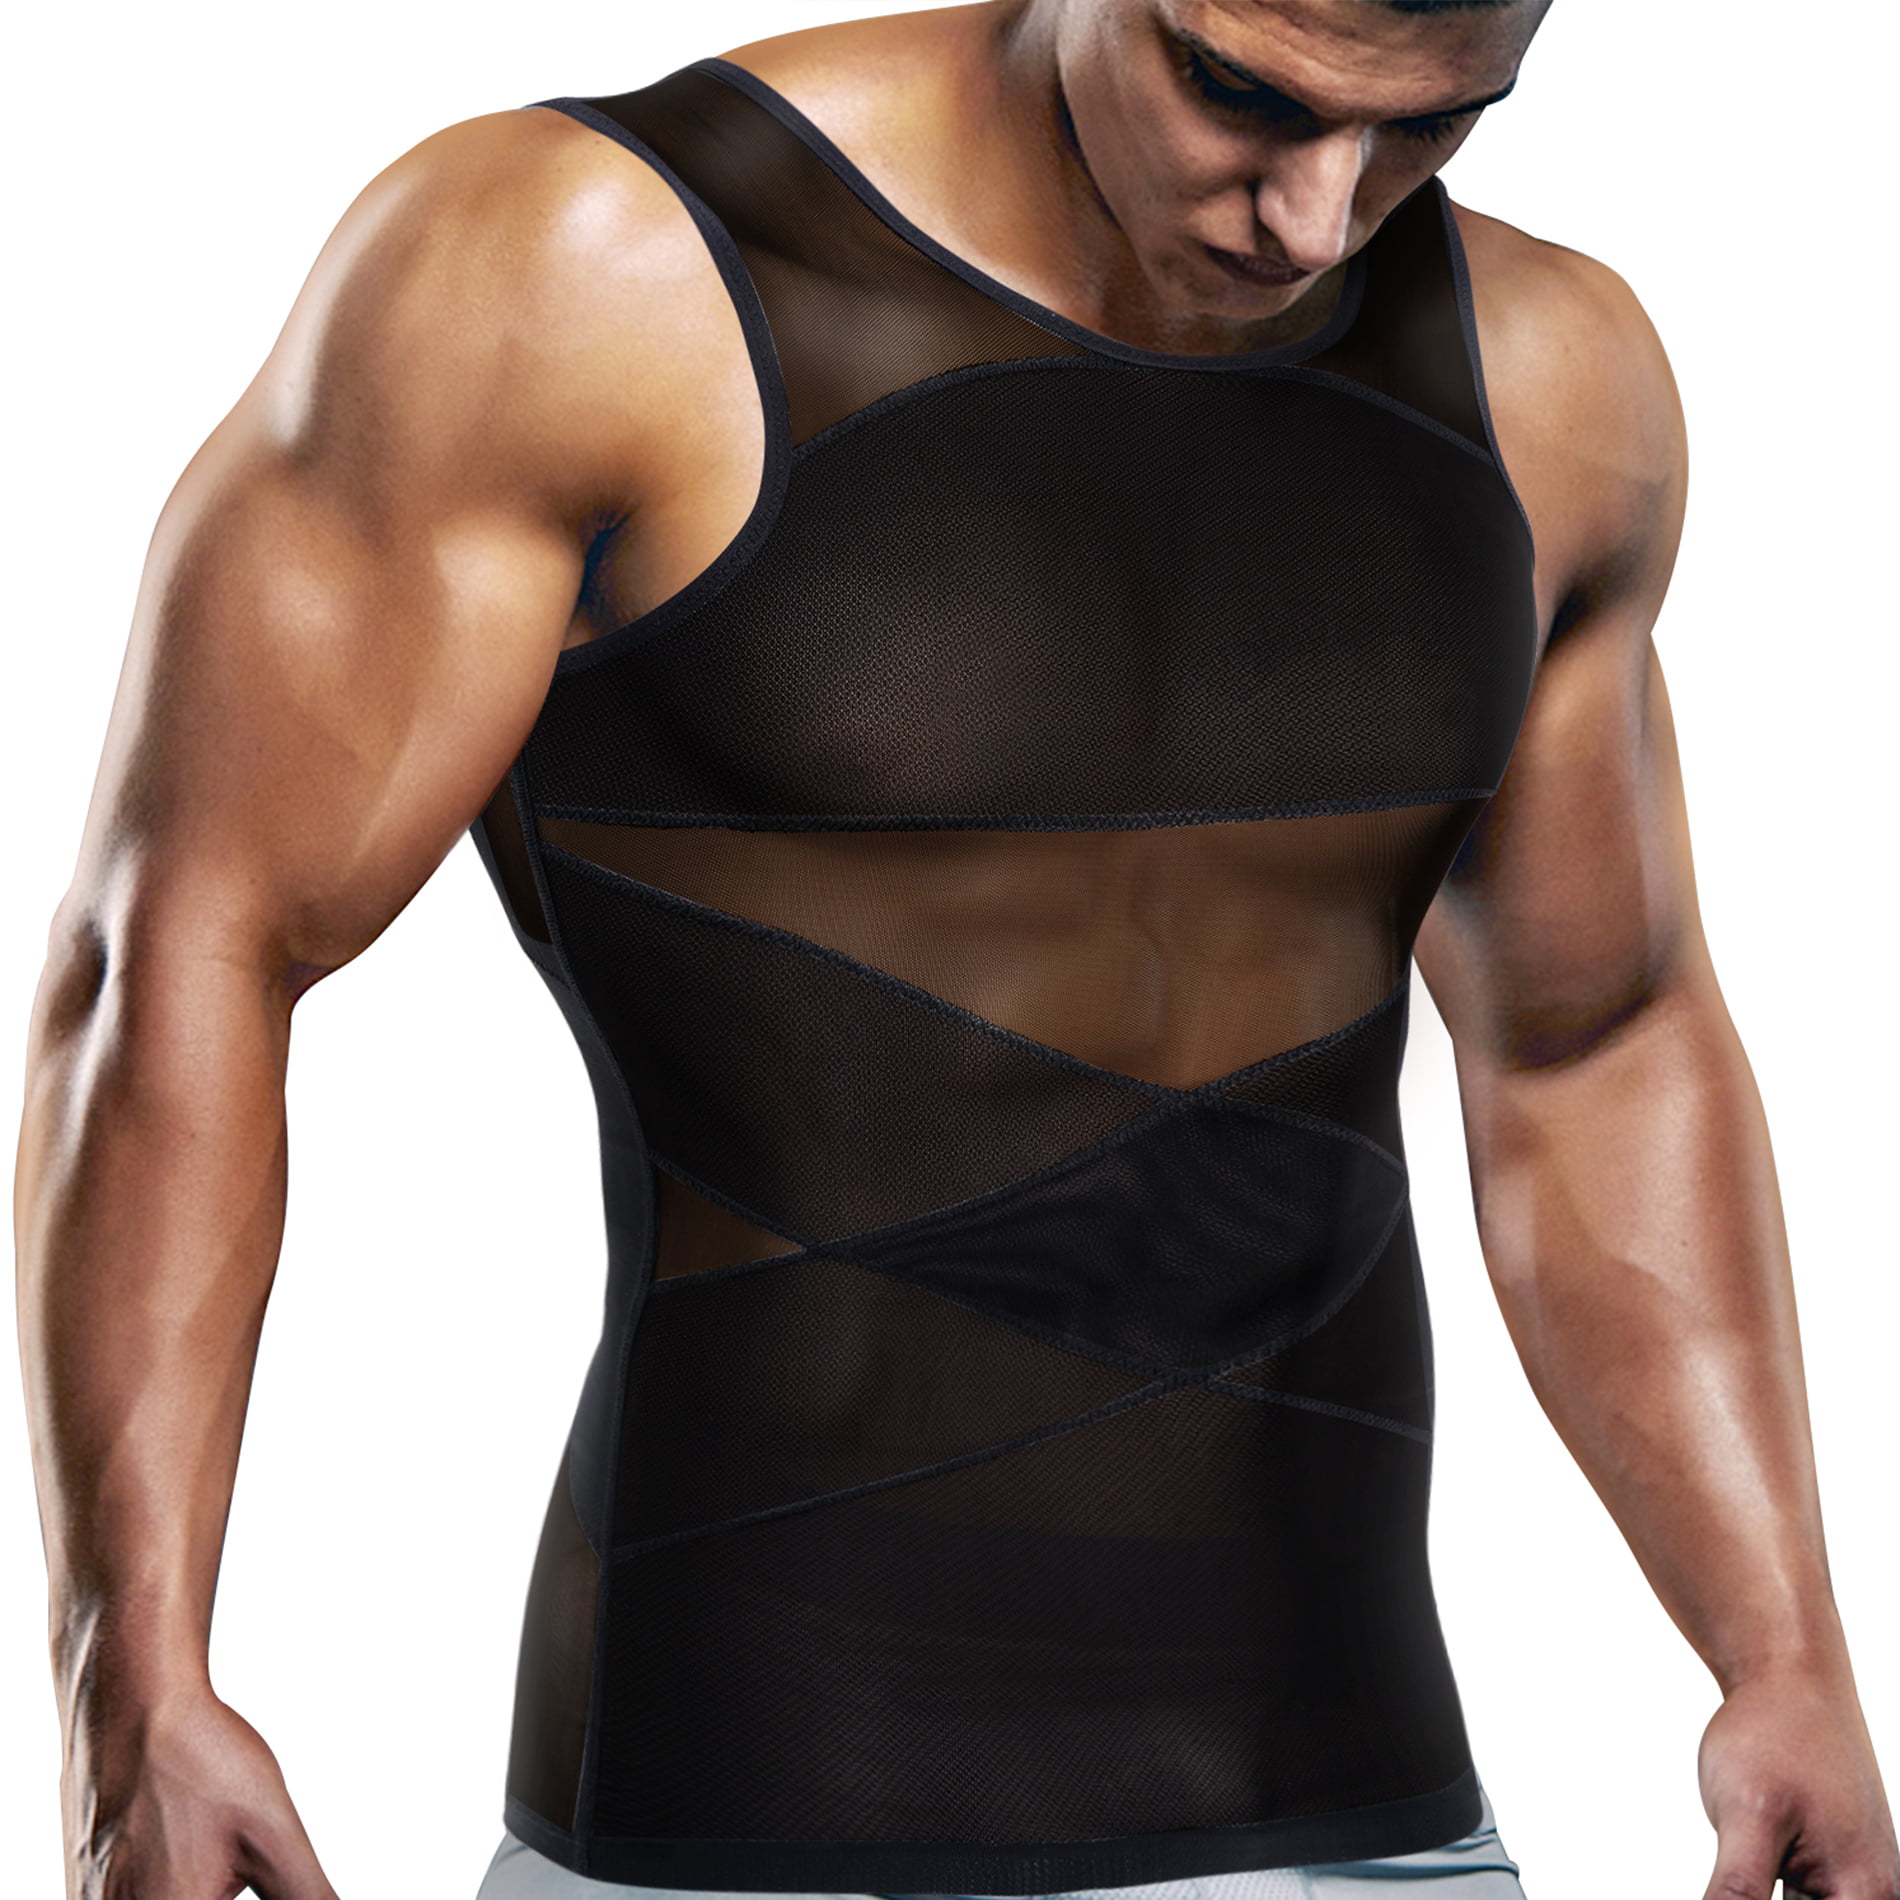 TAILONG Compression Shirt for Men Slimming Body Shaper Sport Vest Workout Tank Top Athletic Undershirt 